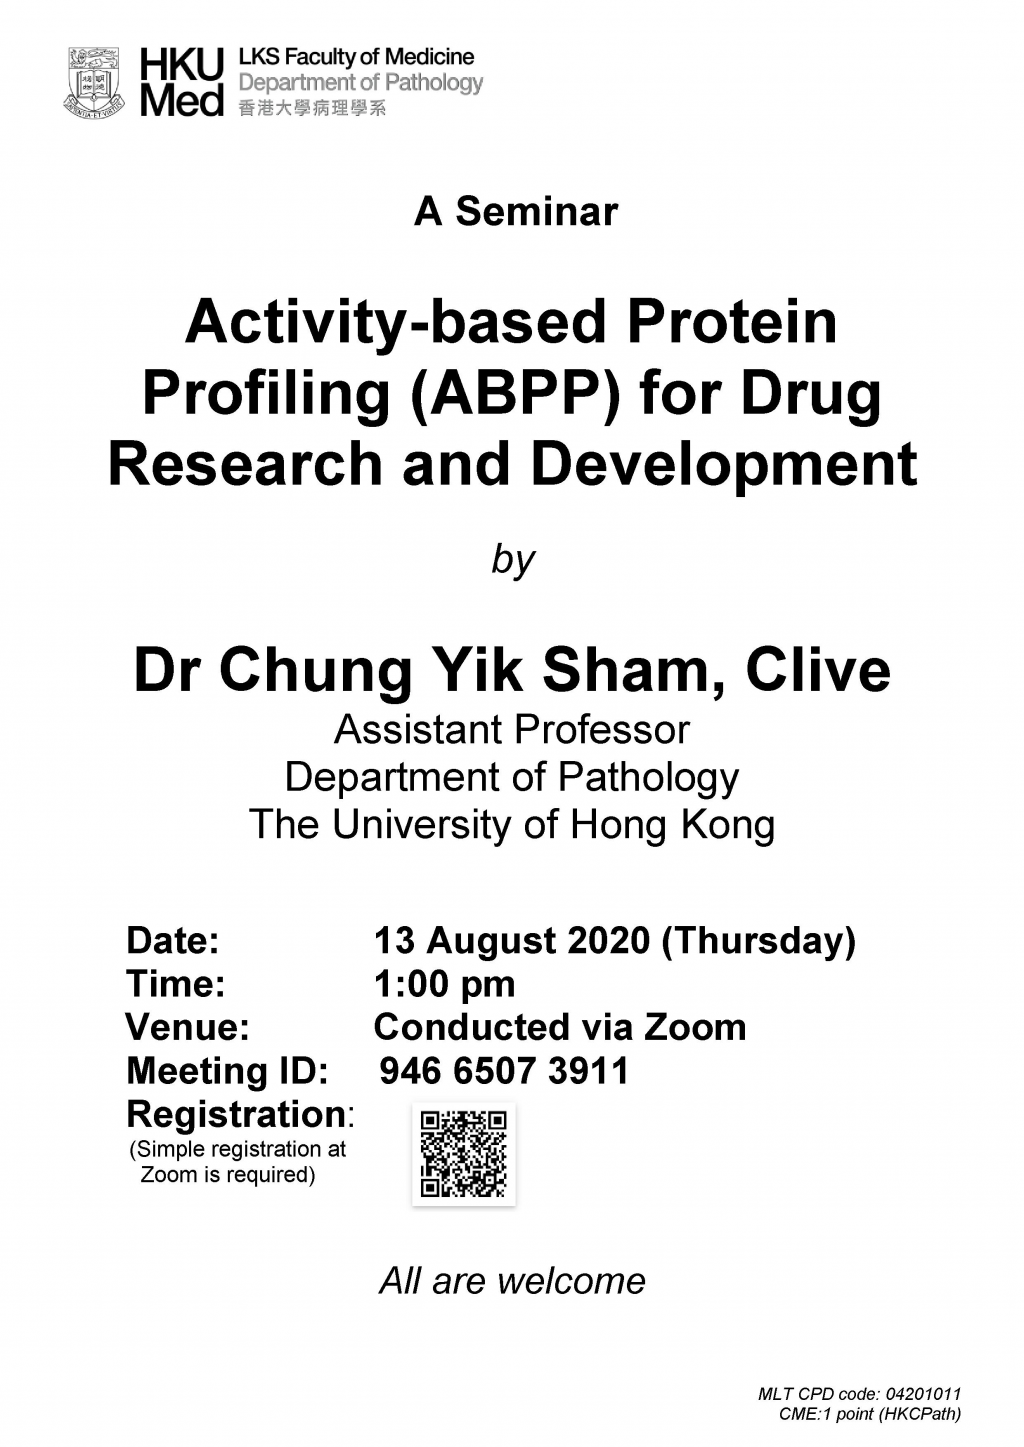 A Seminar by Dr Clive Chung